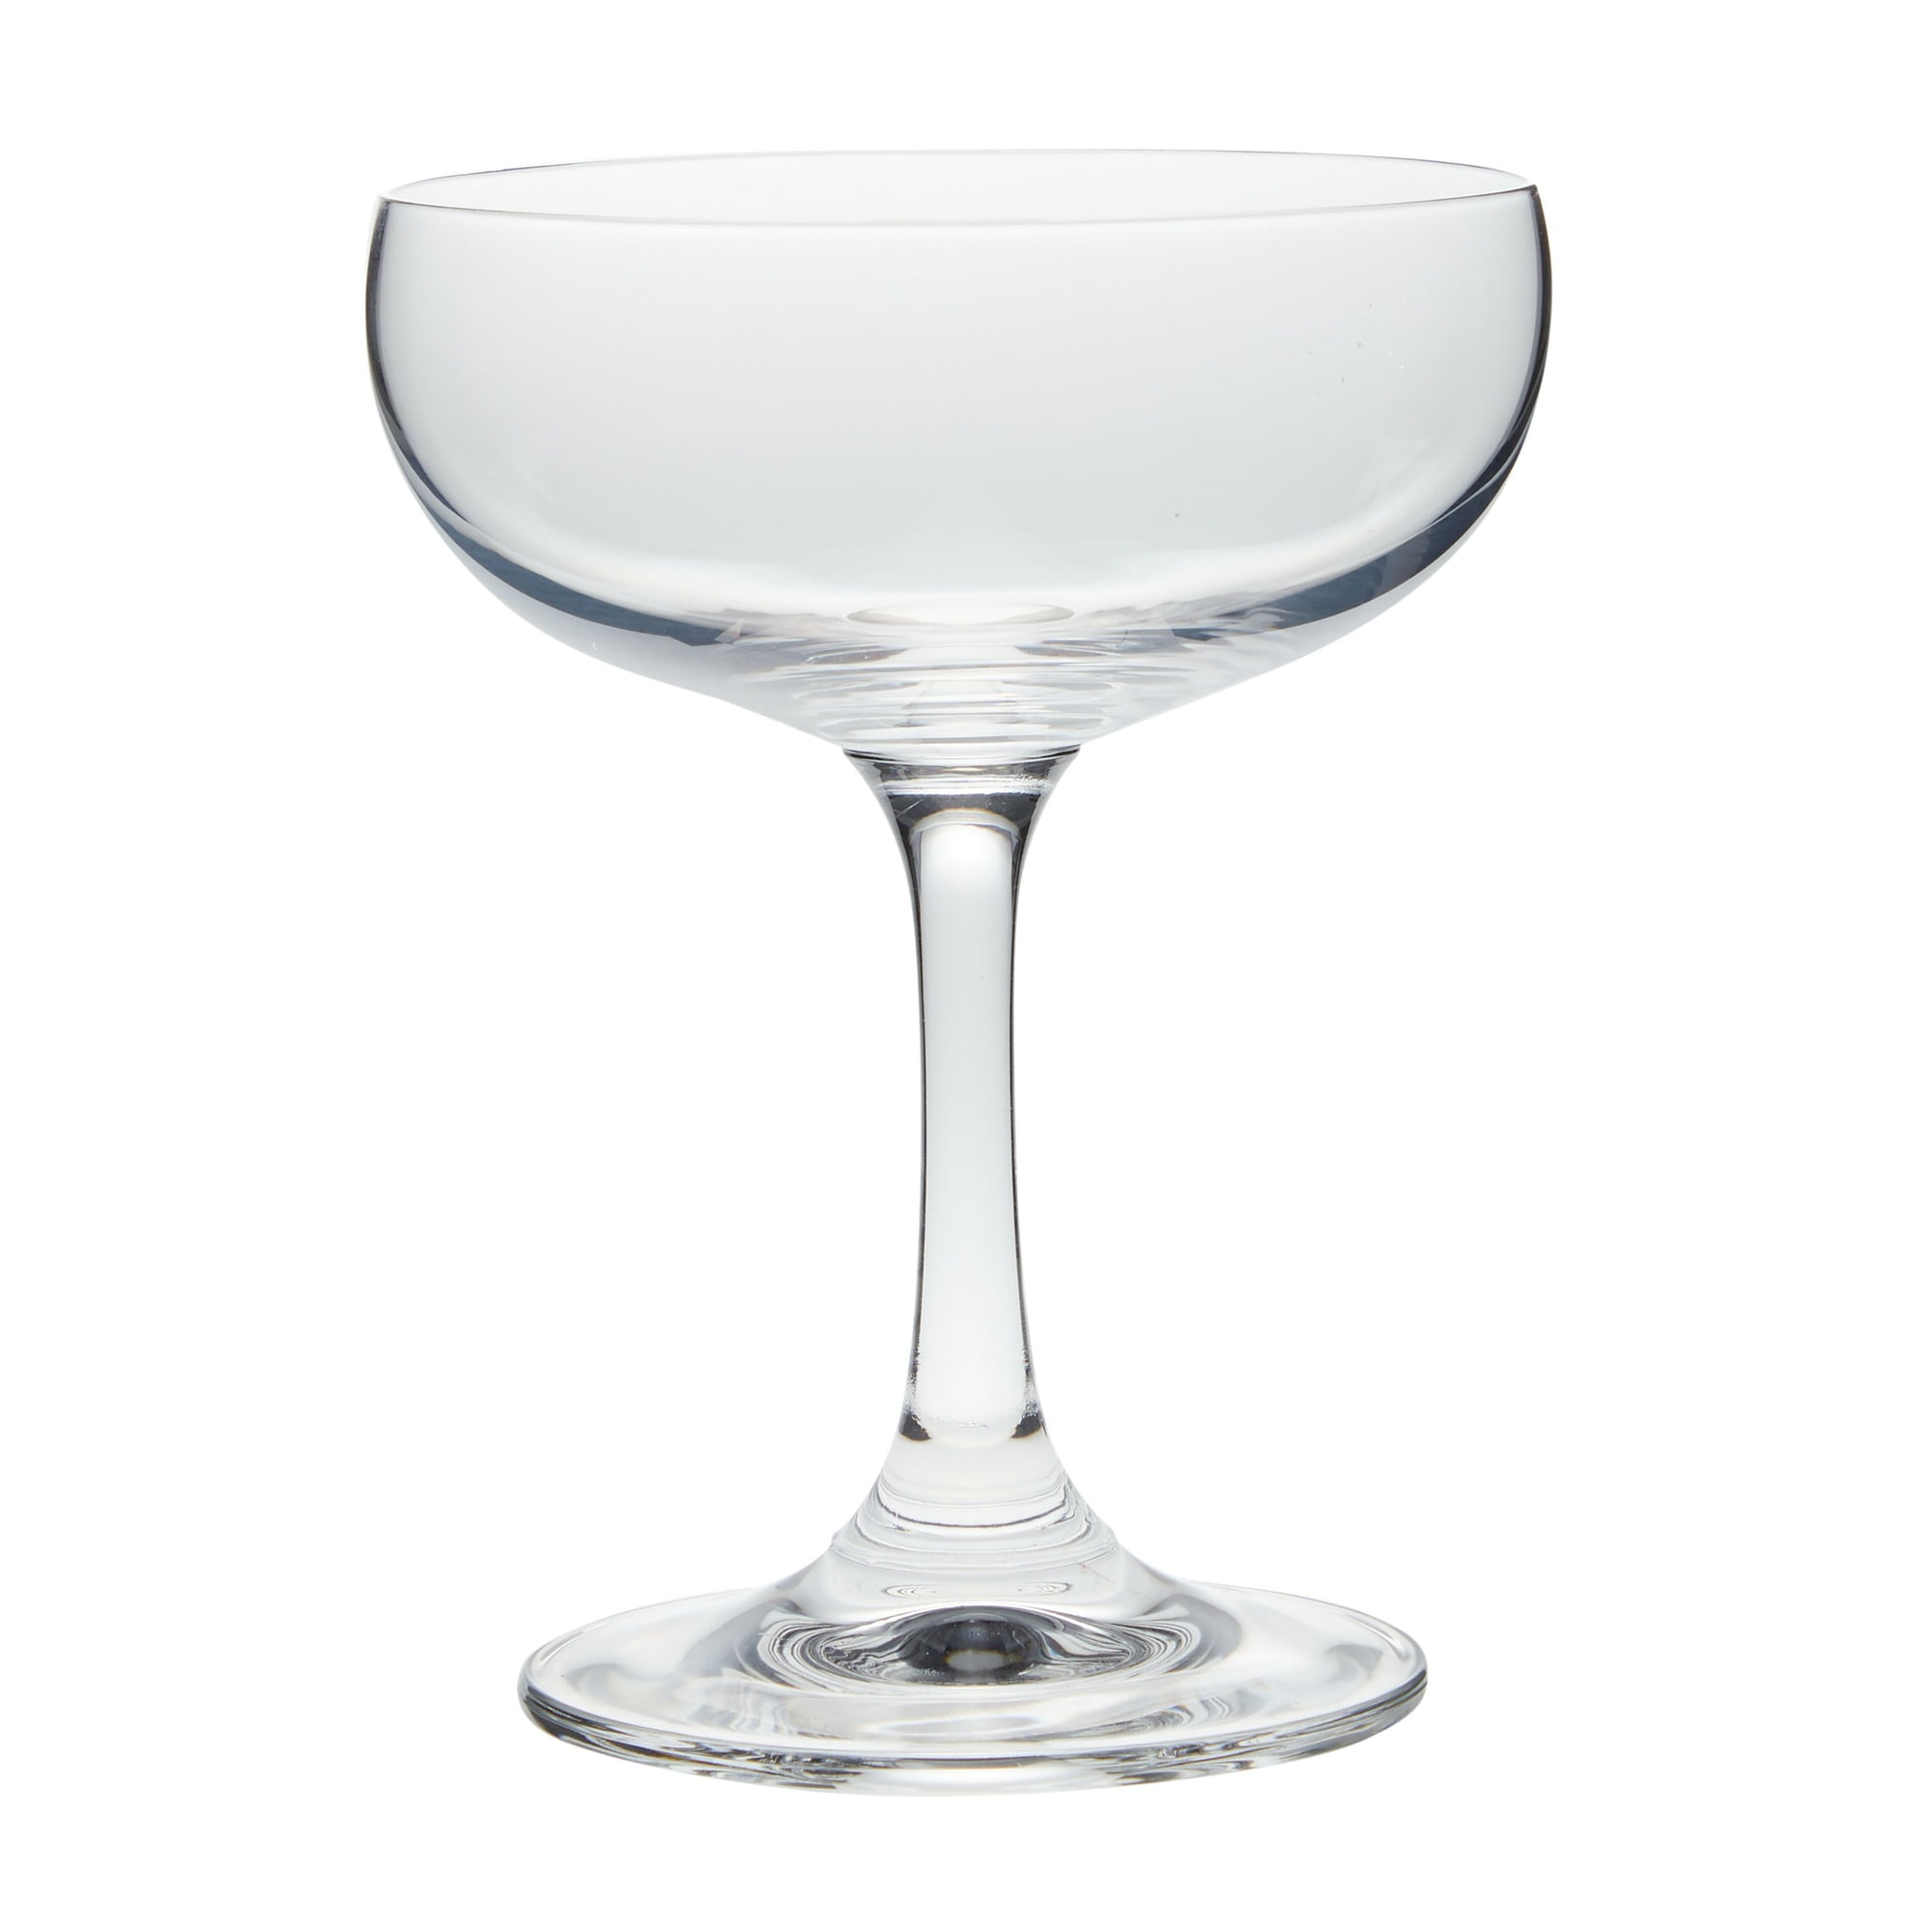 Vintage Crystal Champagne Coupe Gold Rim Glasses | Set of 2 | 7 oz, Gilded  Rim Classic Cocktail Glas…See more Vintage Crystal Champagne Coupe Gold Rim